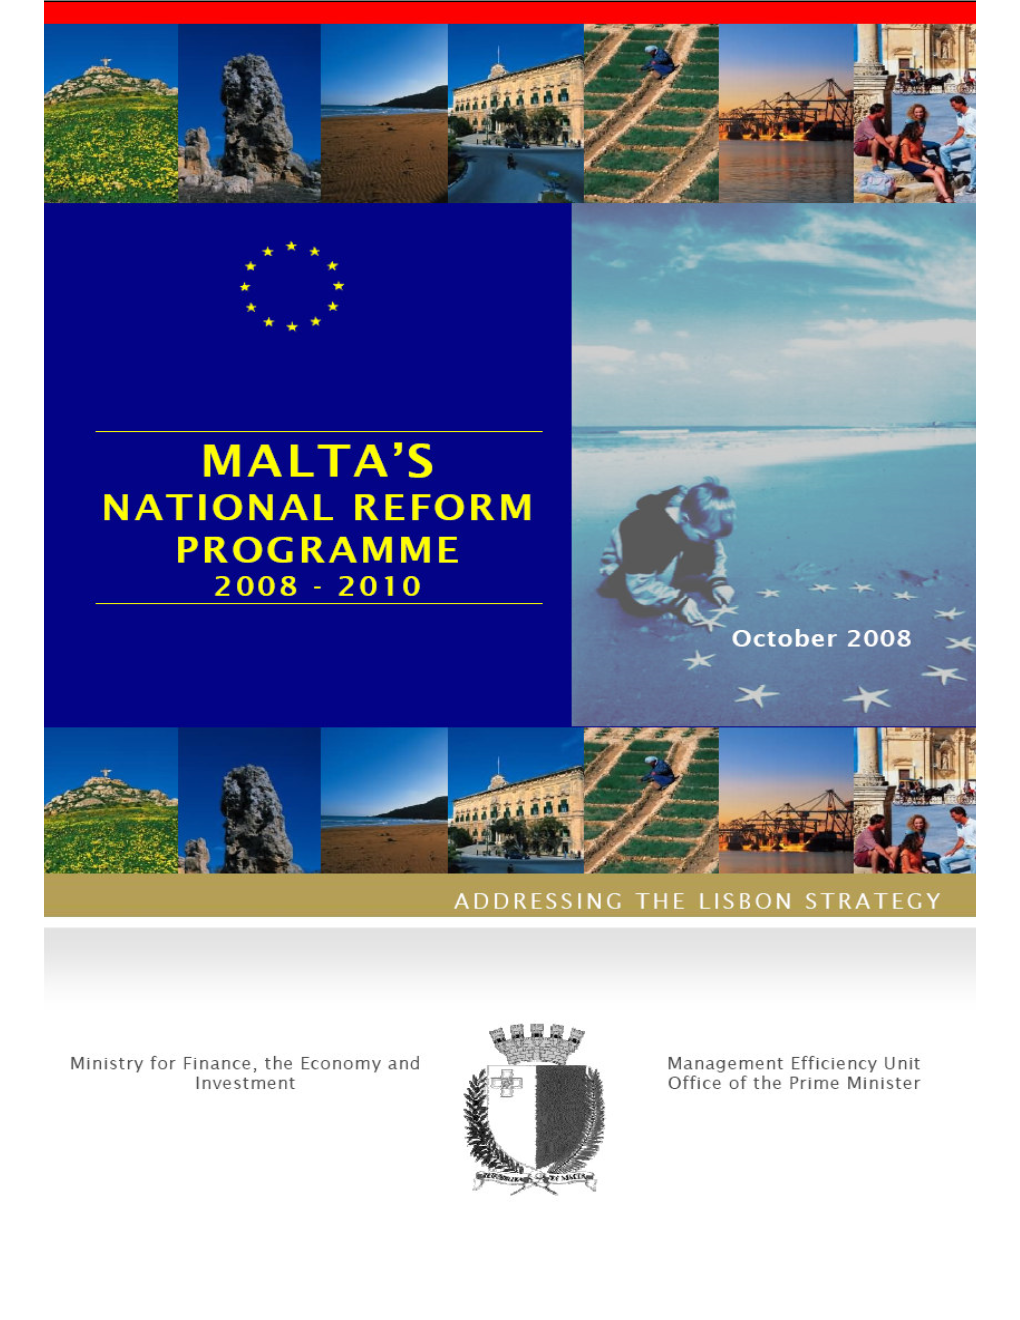 National Reform Programme 2008-2010